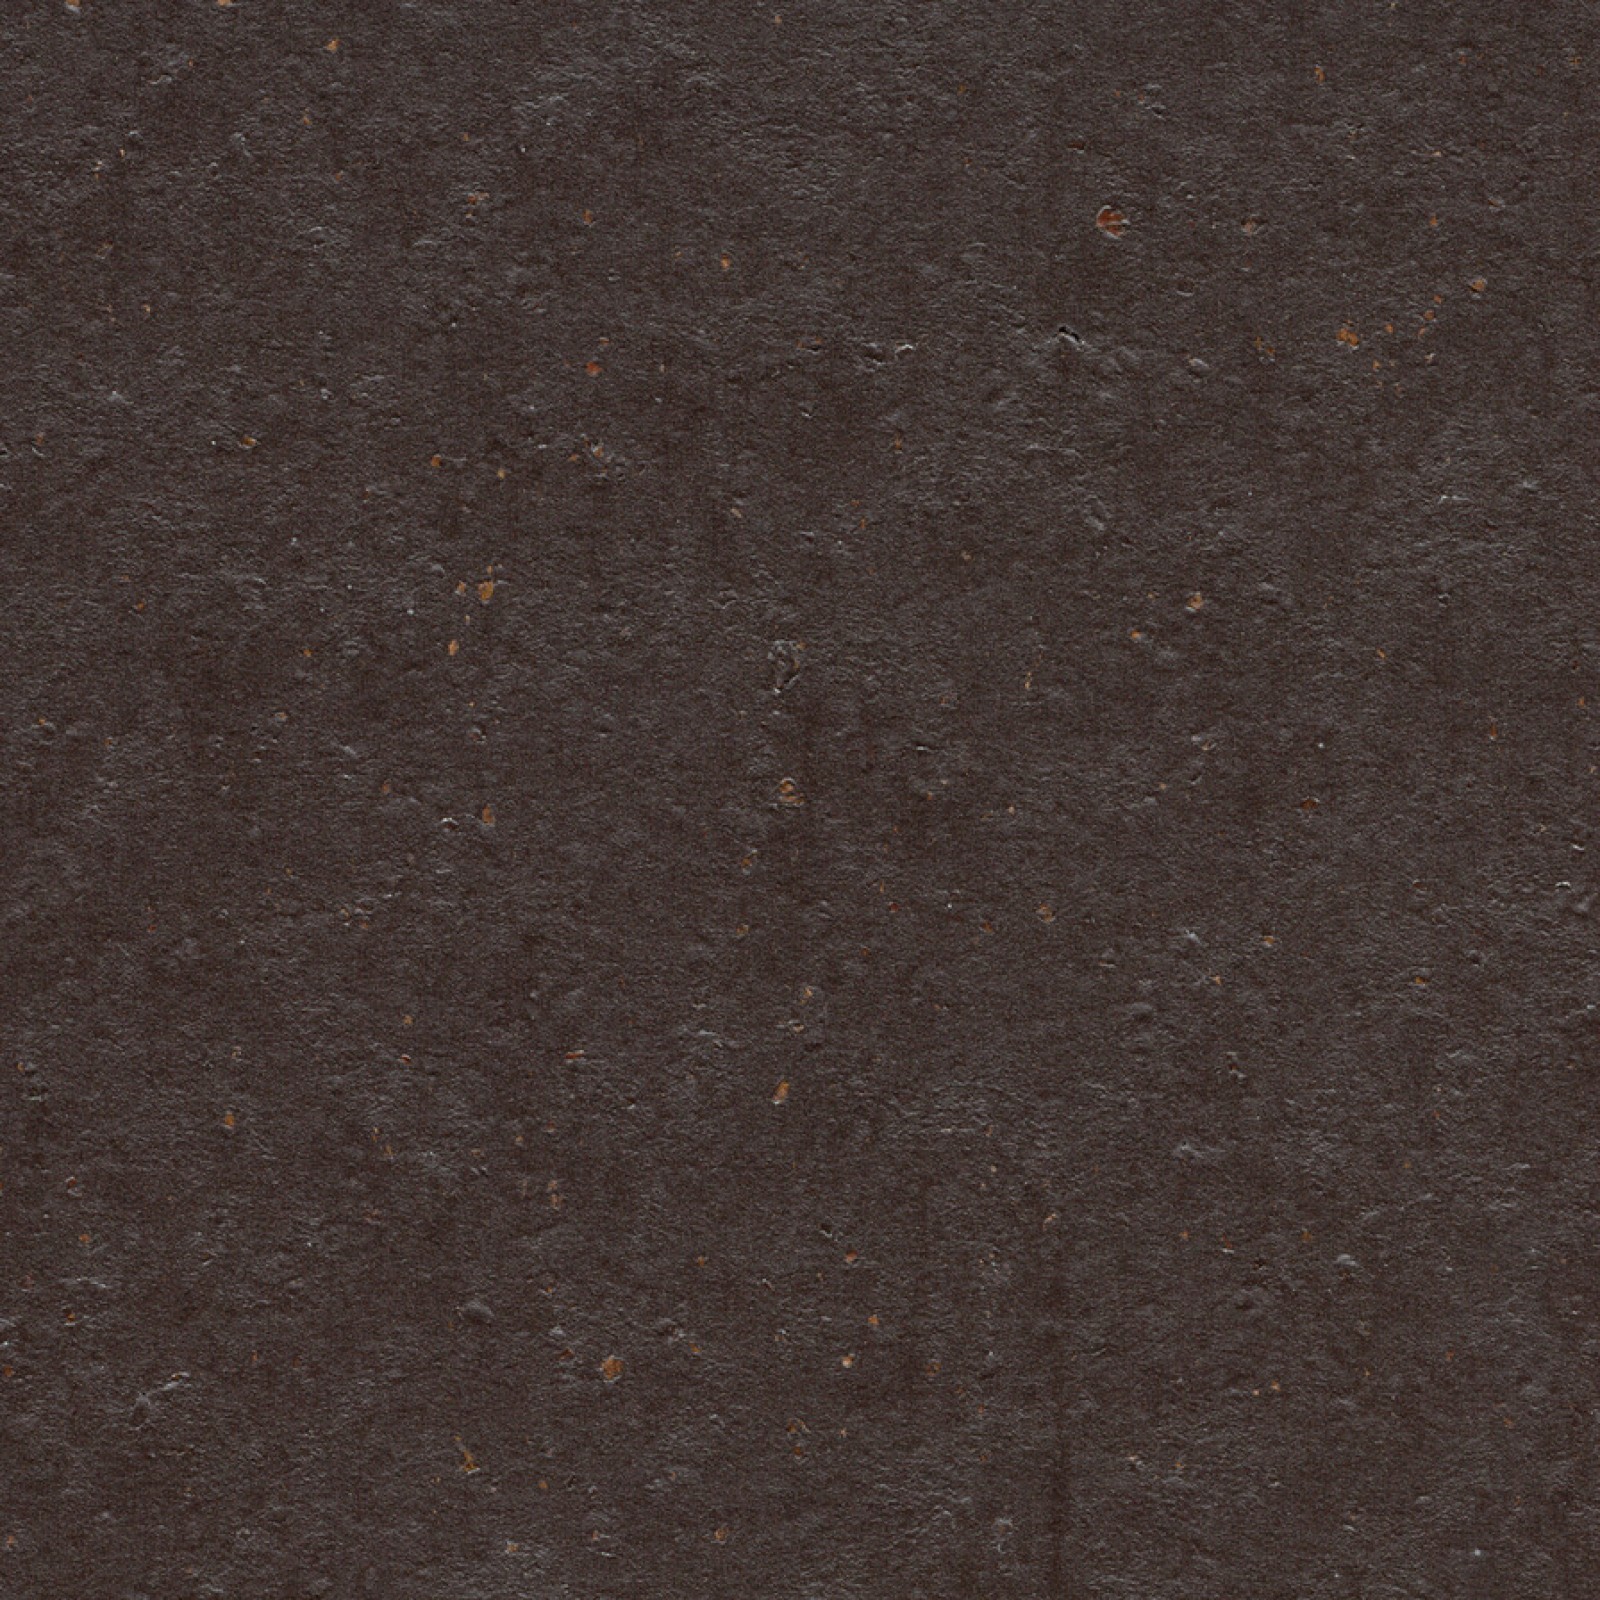 Vzor - 3581 dark chocolate